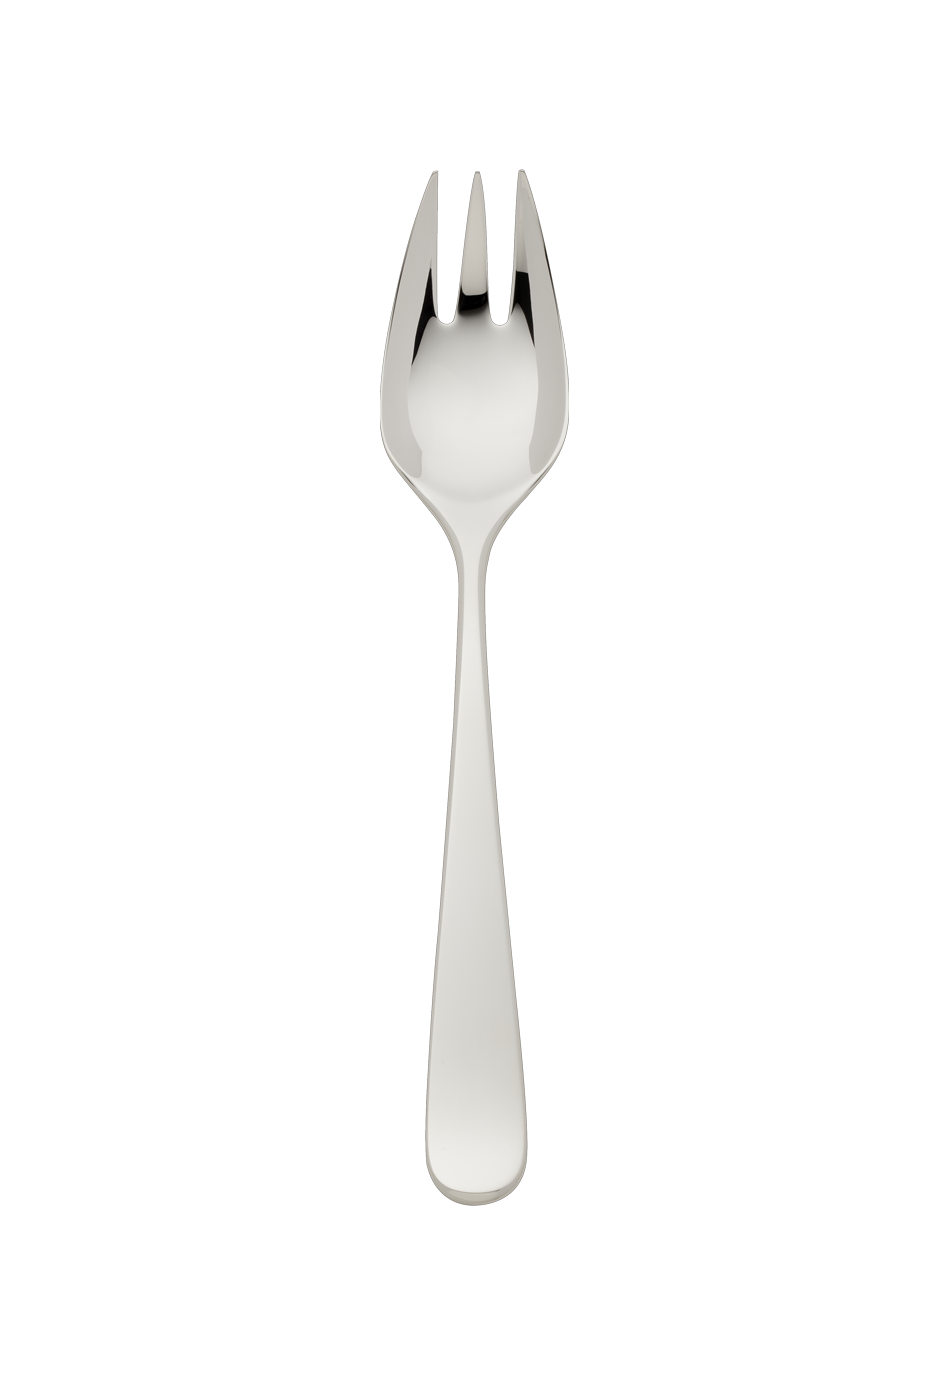 Dante Vegetable Fork (150g massive silverplated)